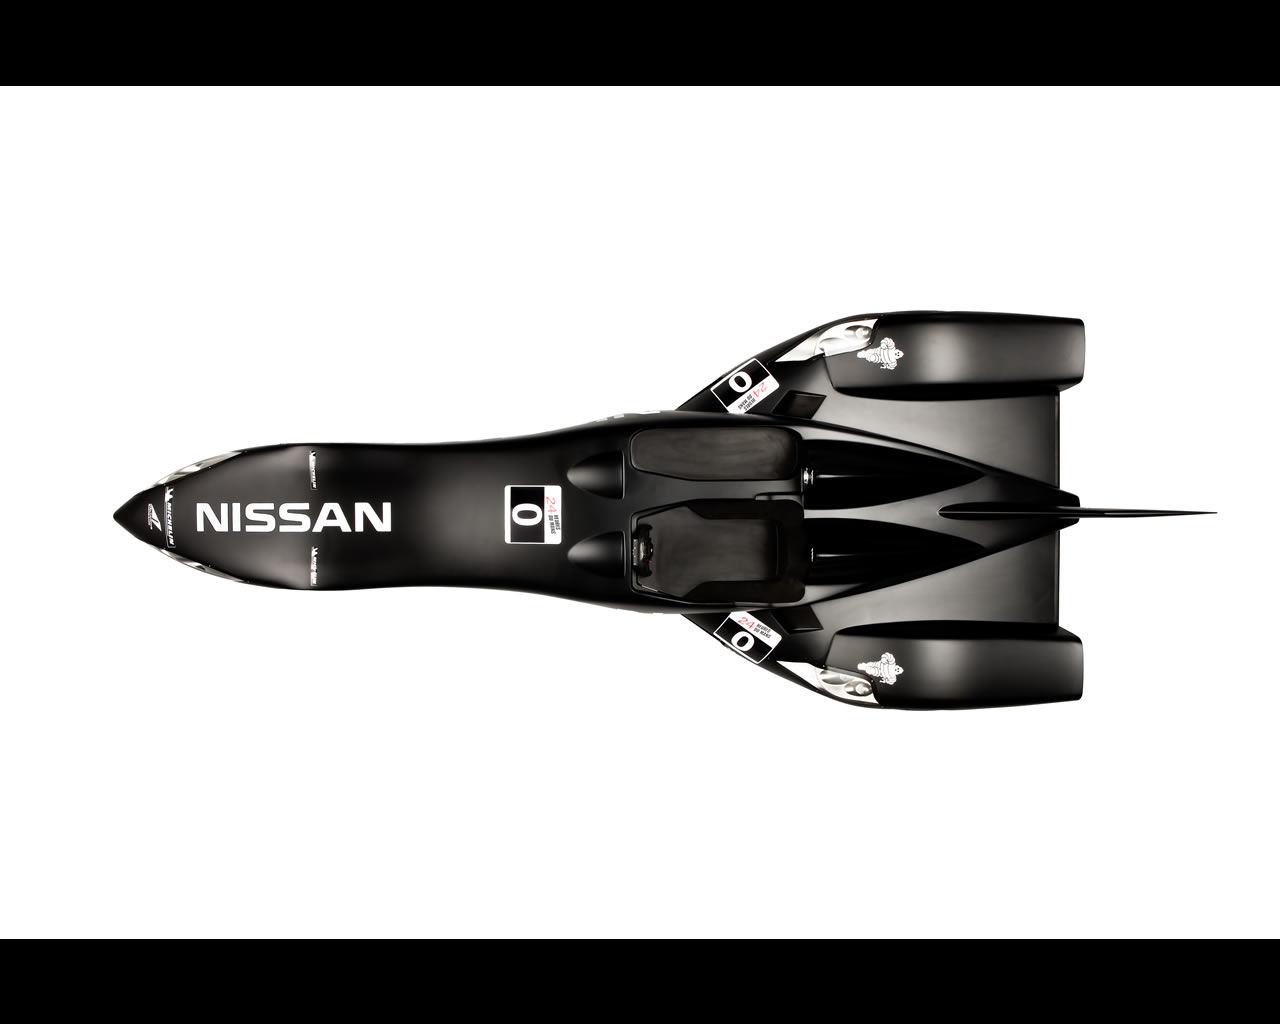 Nissan prototype race cars #1